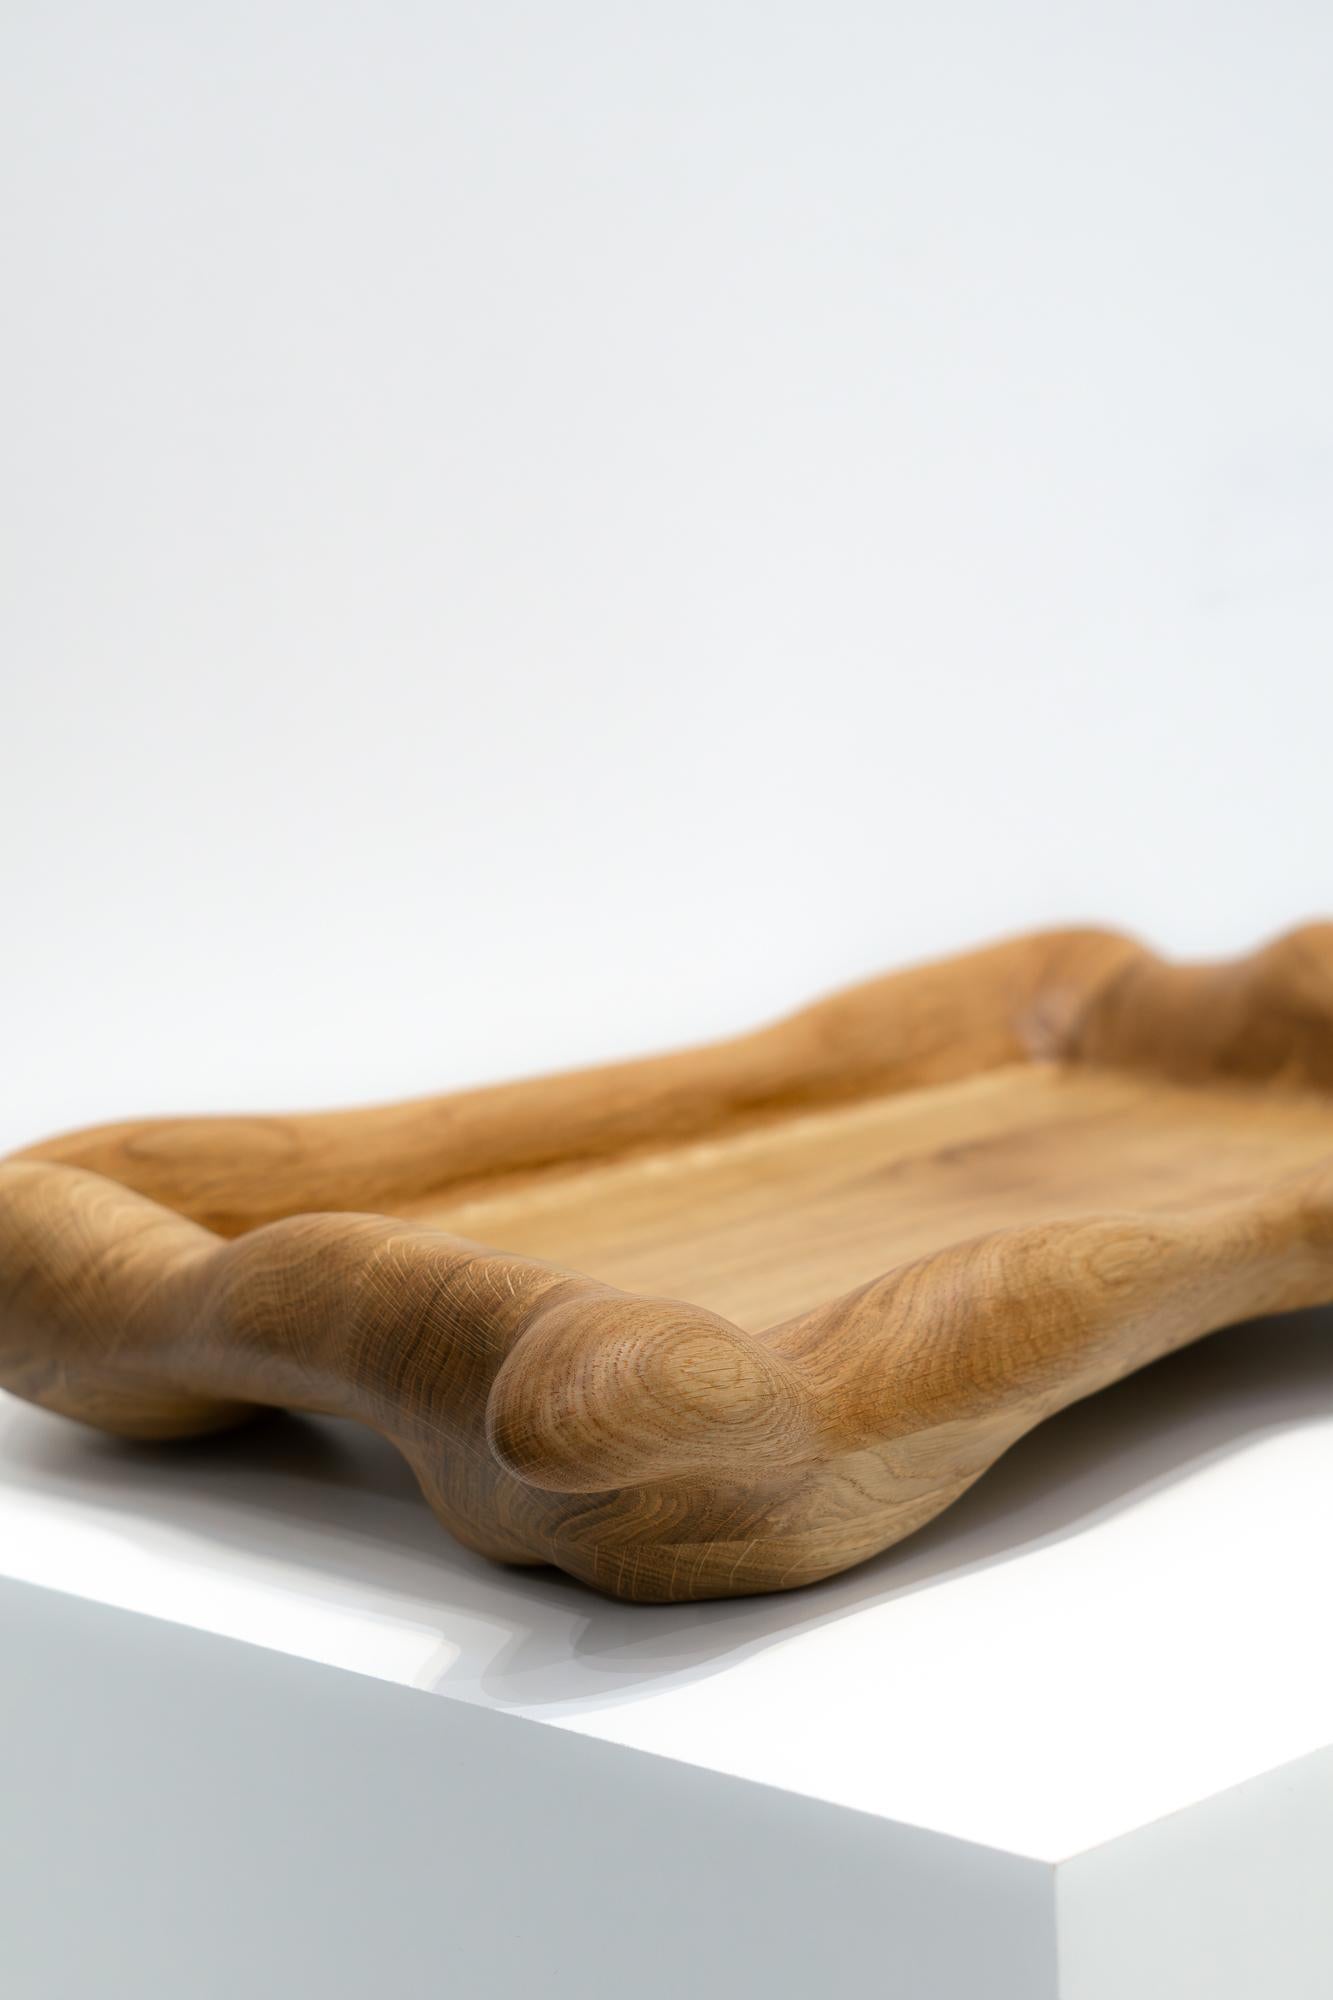 Carved Sculptural Serving Tray in Oak Wood For Sale